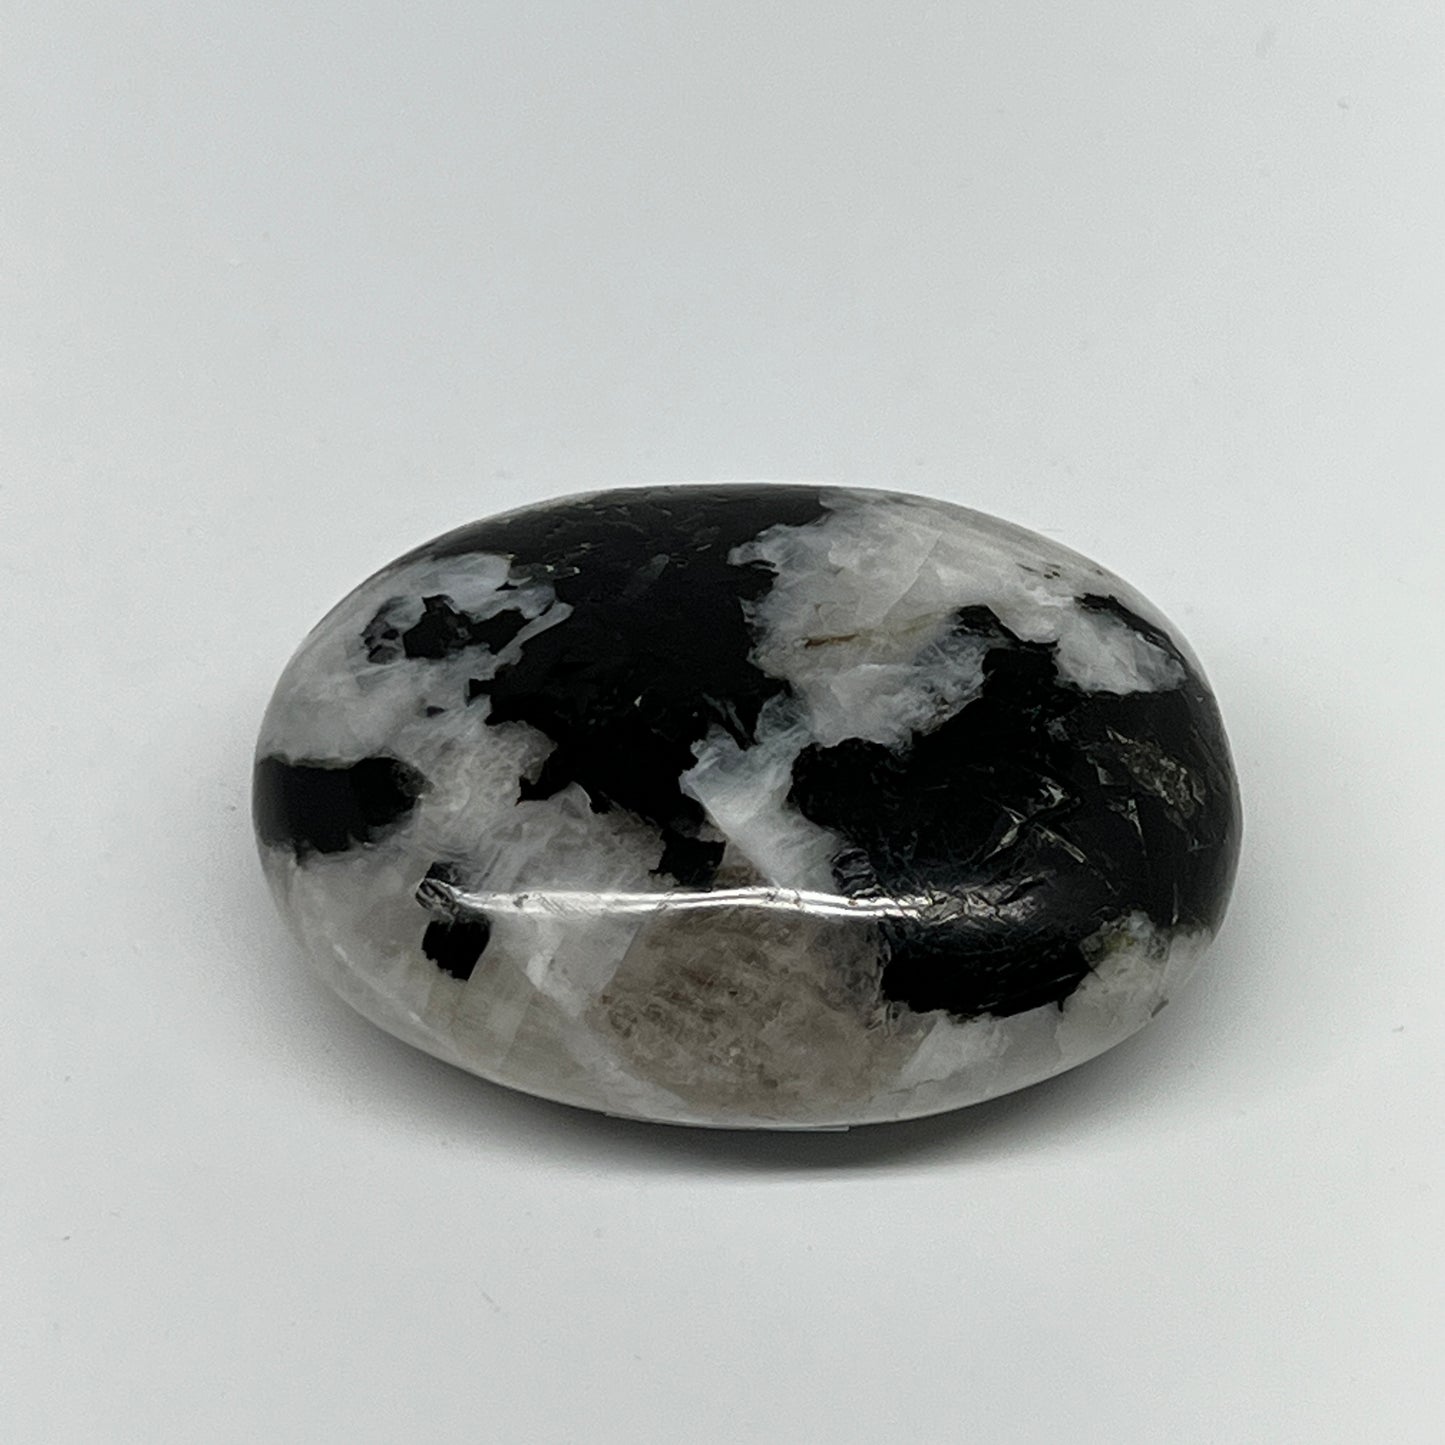 113.9g,2.4"x1.8"x1", Rainbow Moonstone Palm-Stone Polished from India, B21340